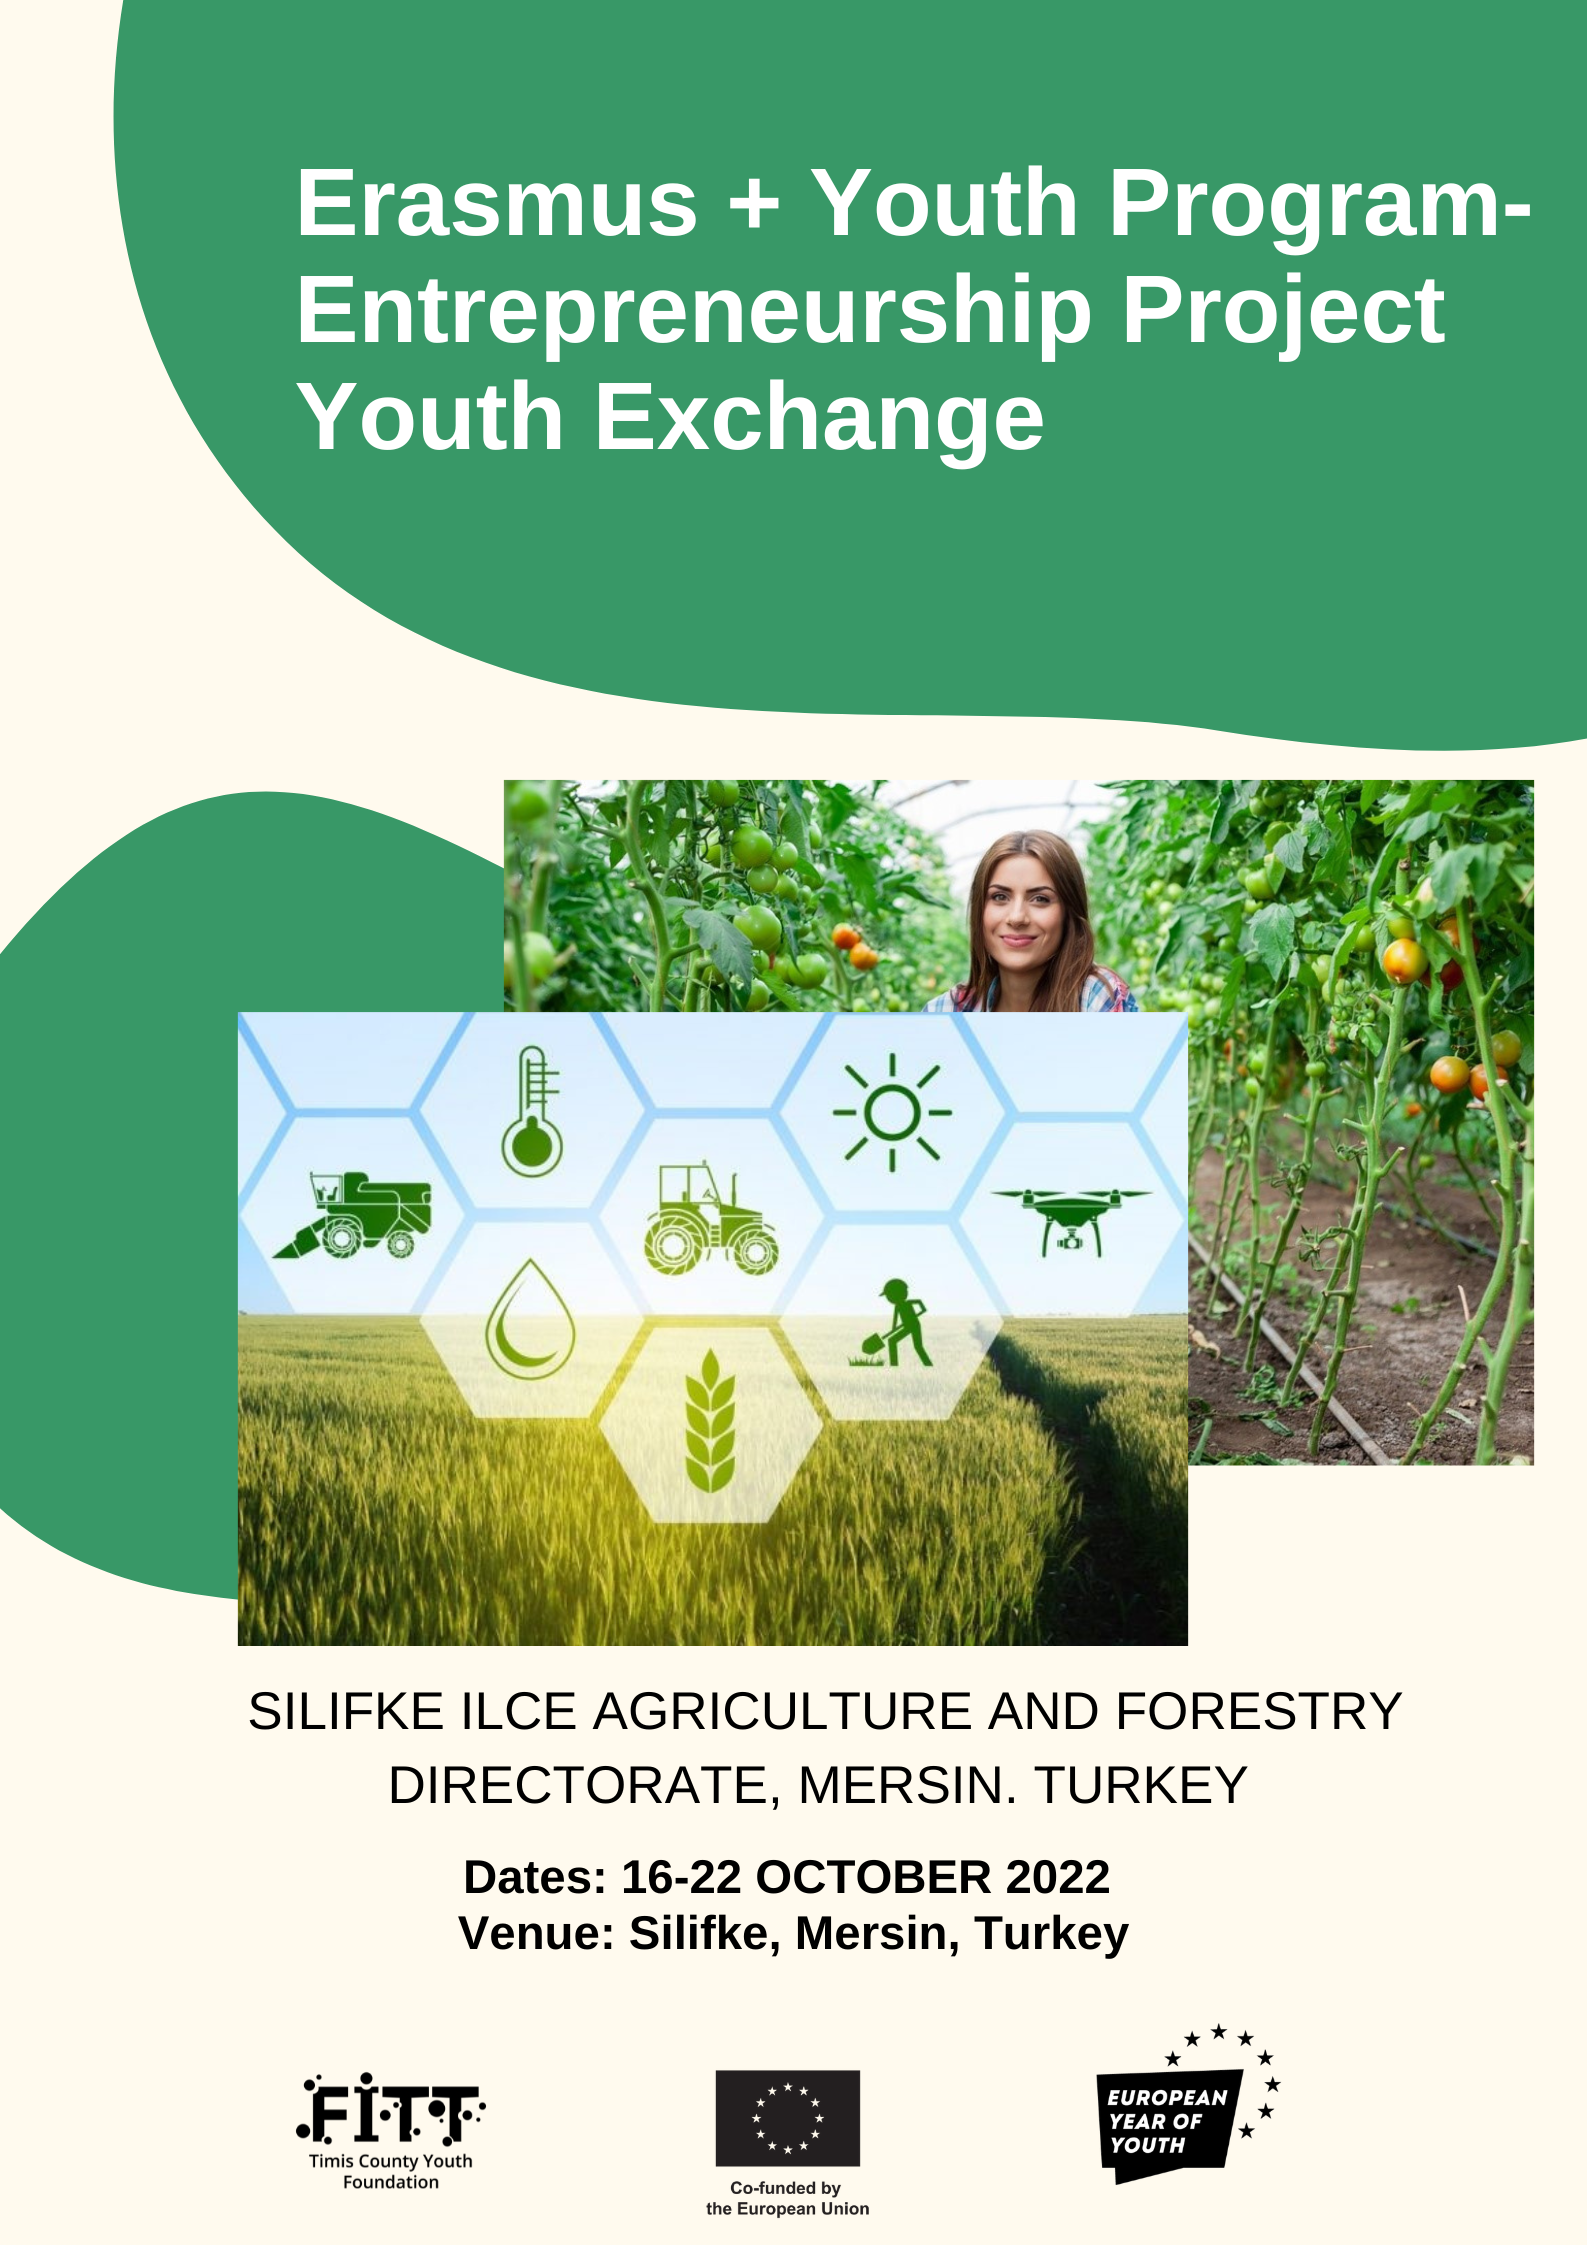 Entrepreneurship Project Youth Exchange